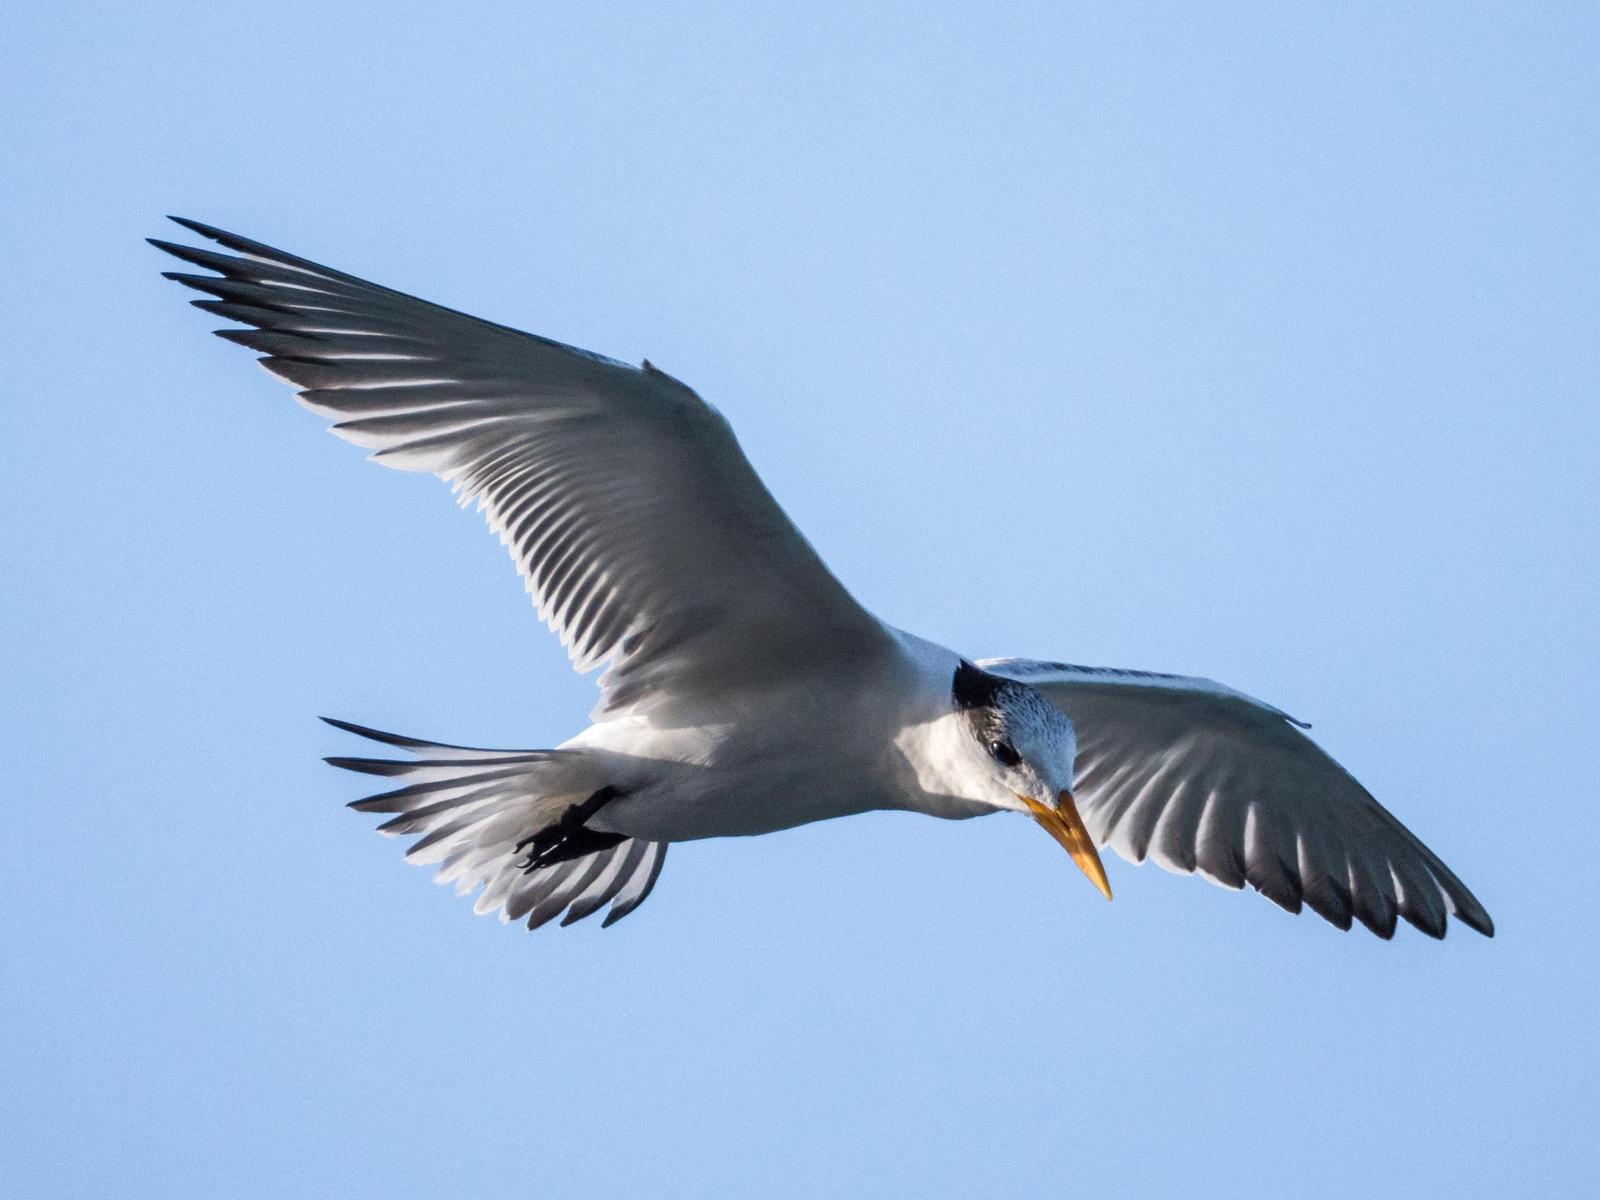 Royal Tern Photo by Michael Rigney